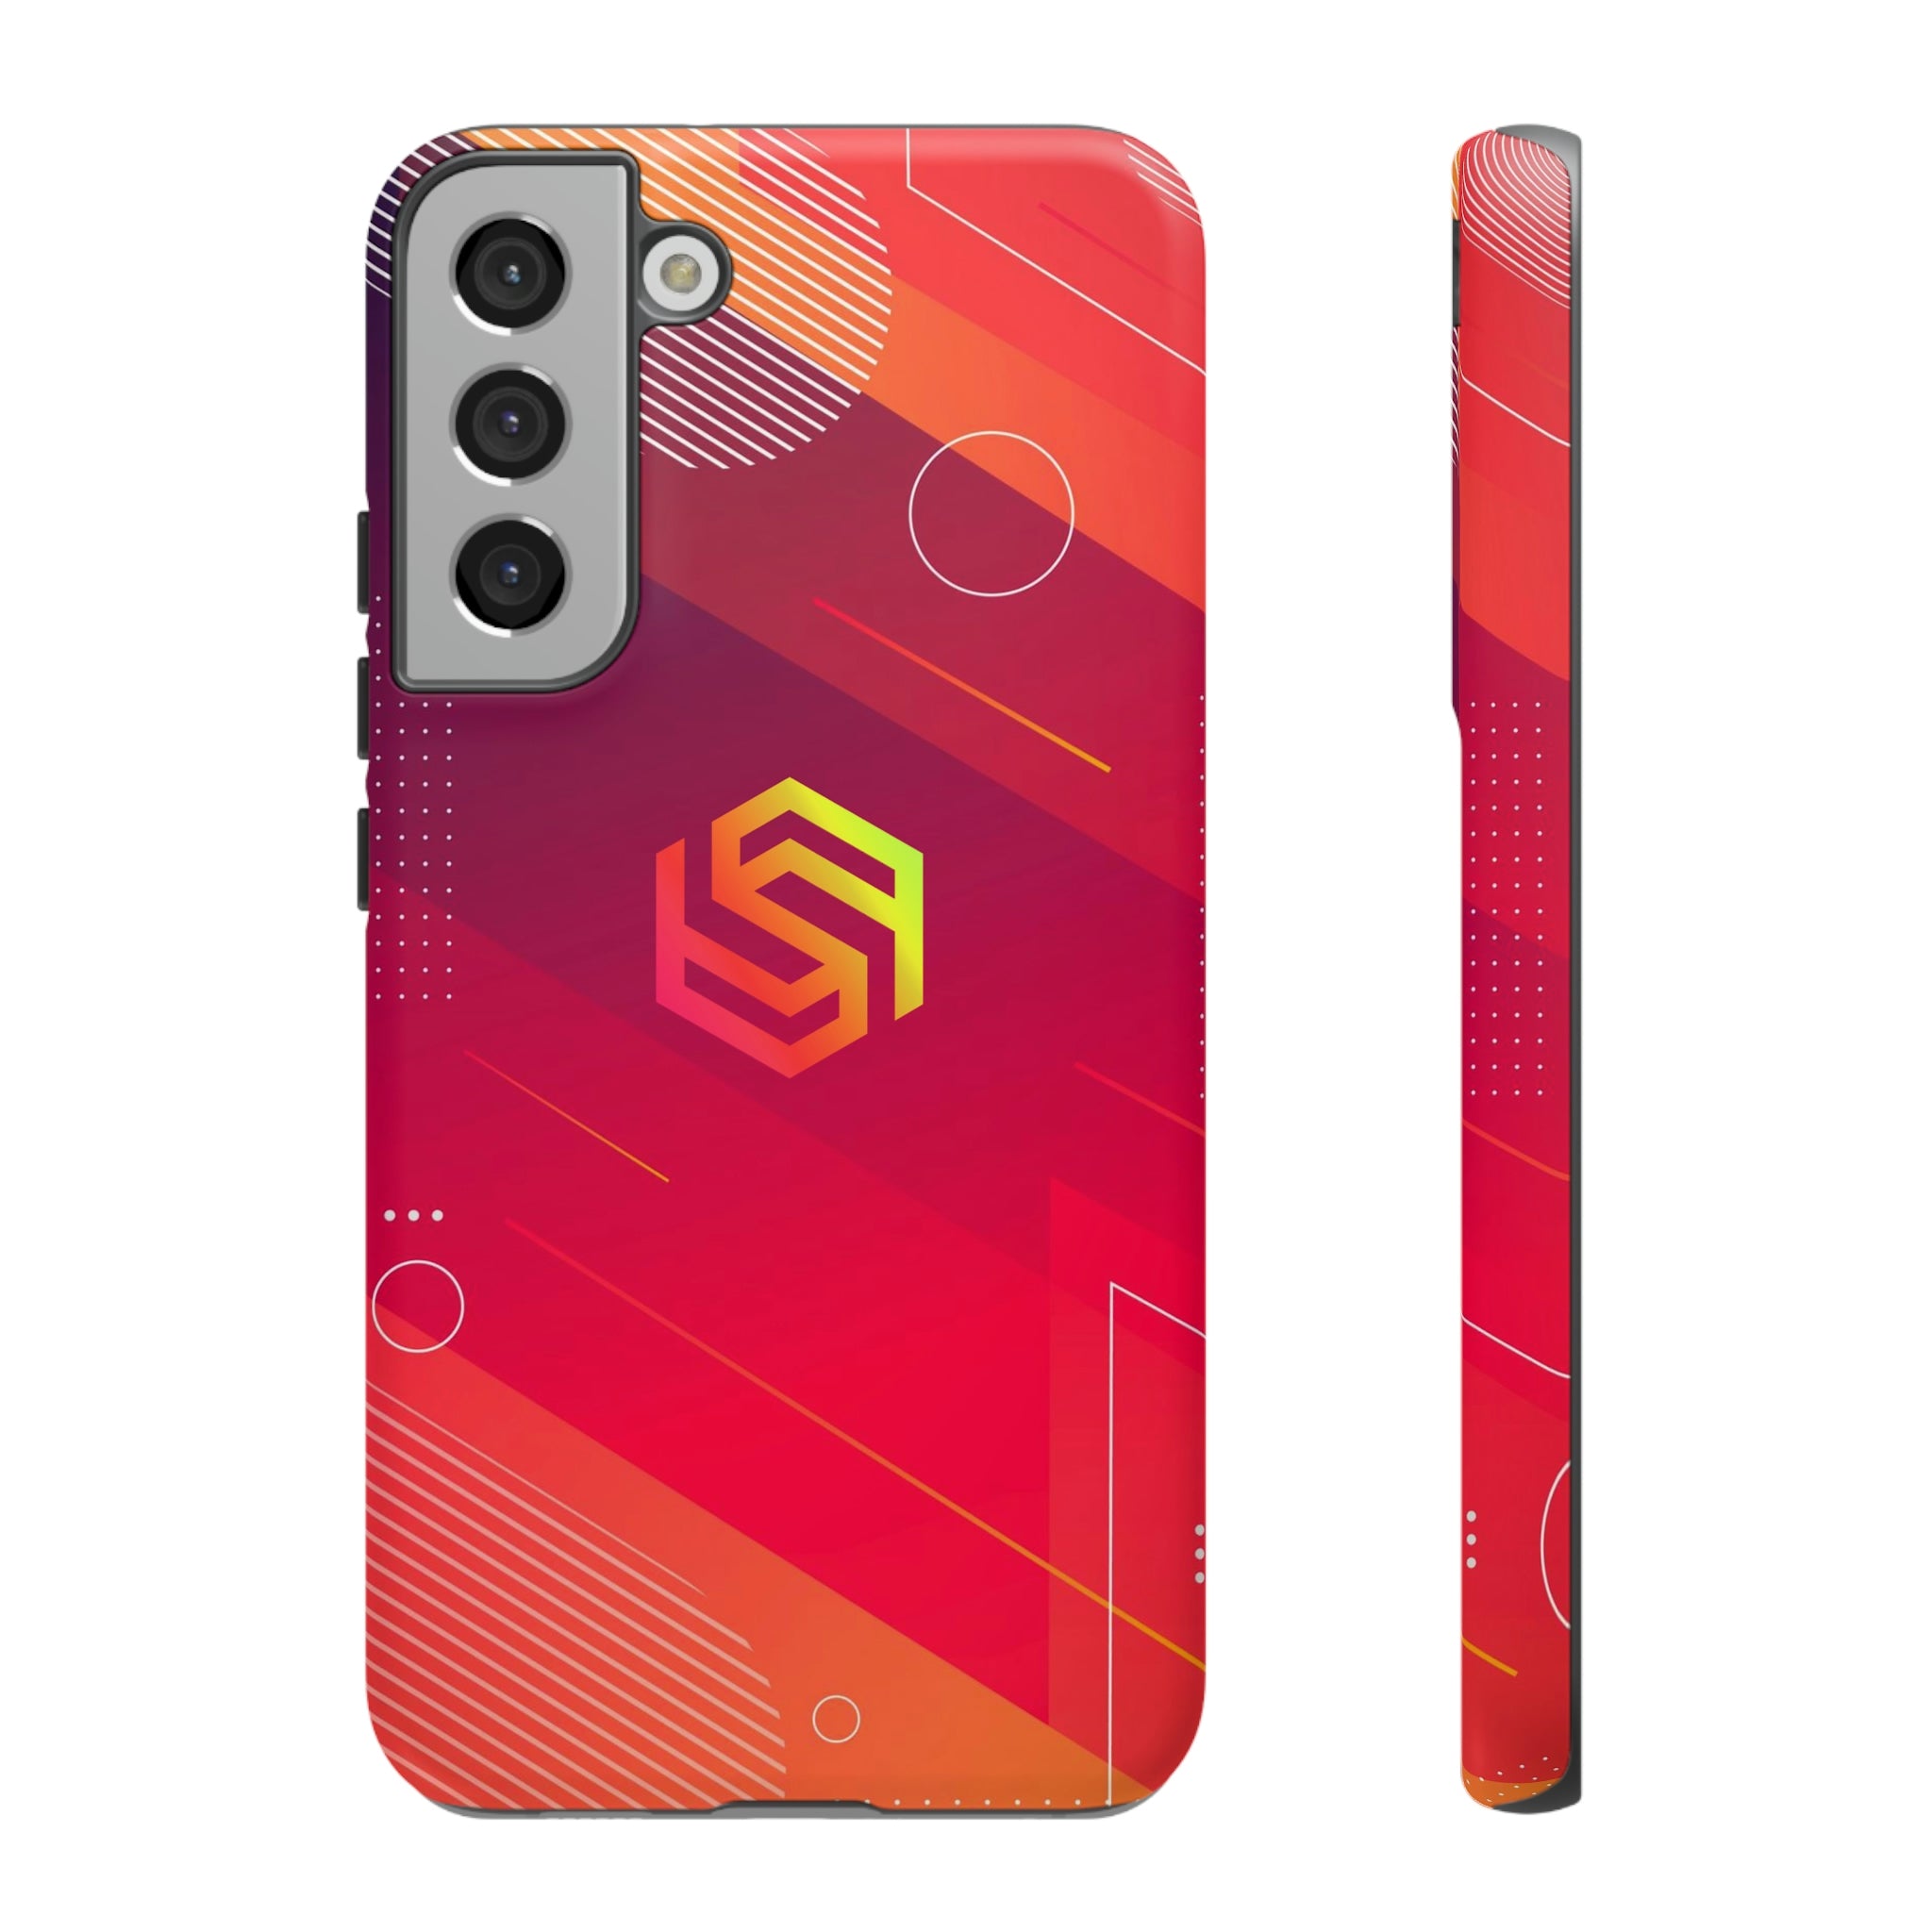 Heatwave - Dual Layered, Full Body, Armored Phone Case for iPhone 13/Samsung Galaxy S22/Google Pixel 6Smartphone CasesStreamLiteStreamLite